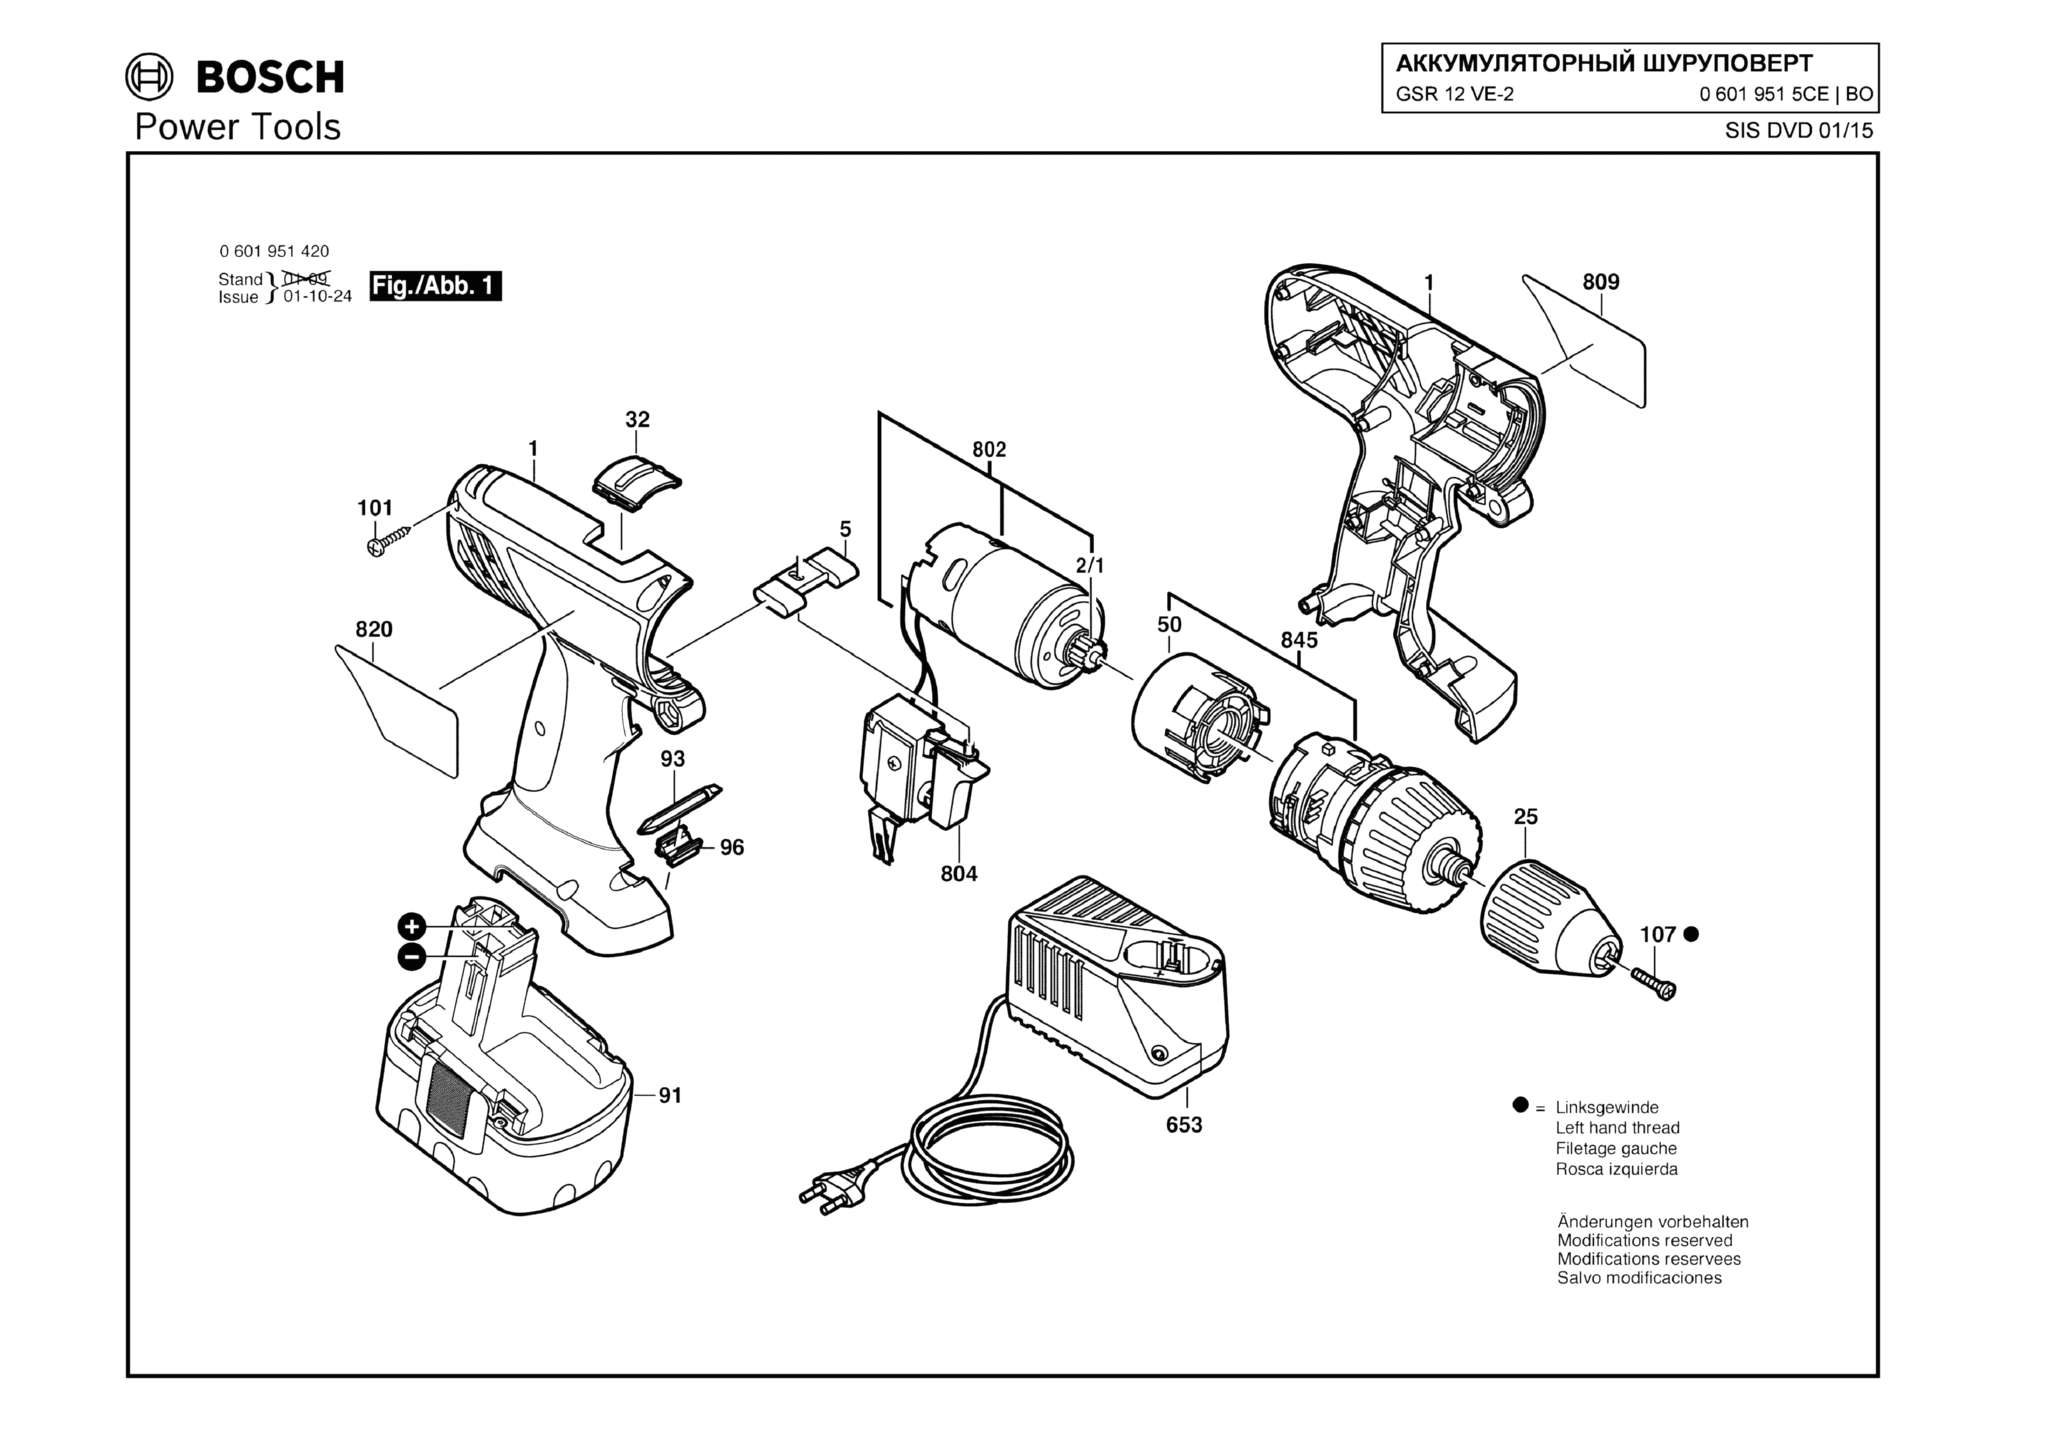 Запчасти, схема и деталировка Bosch GSR 12 VE-2 (ТИП 06019515CE)